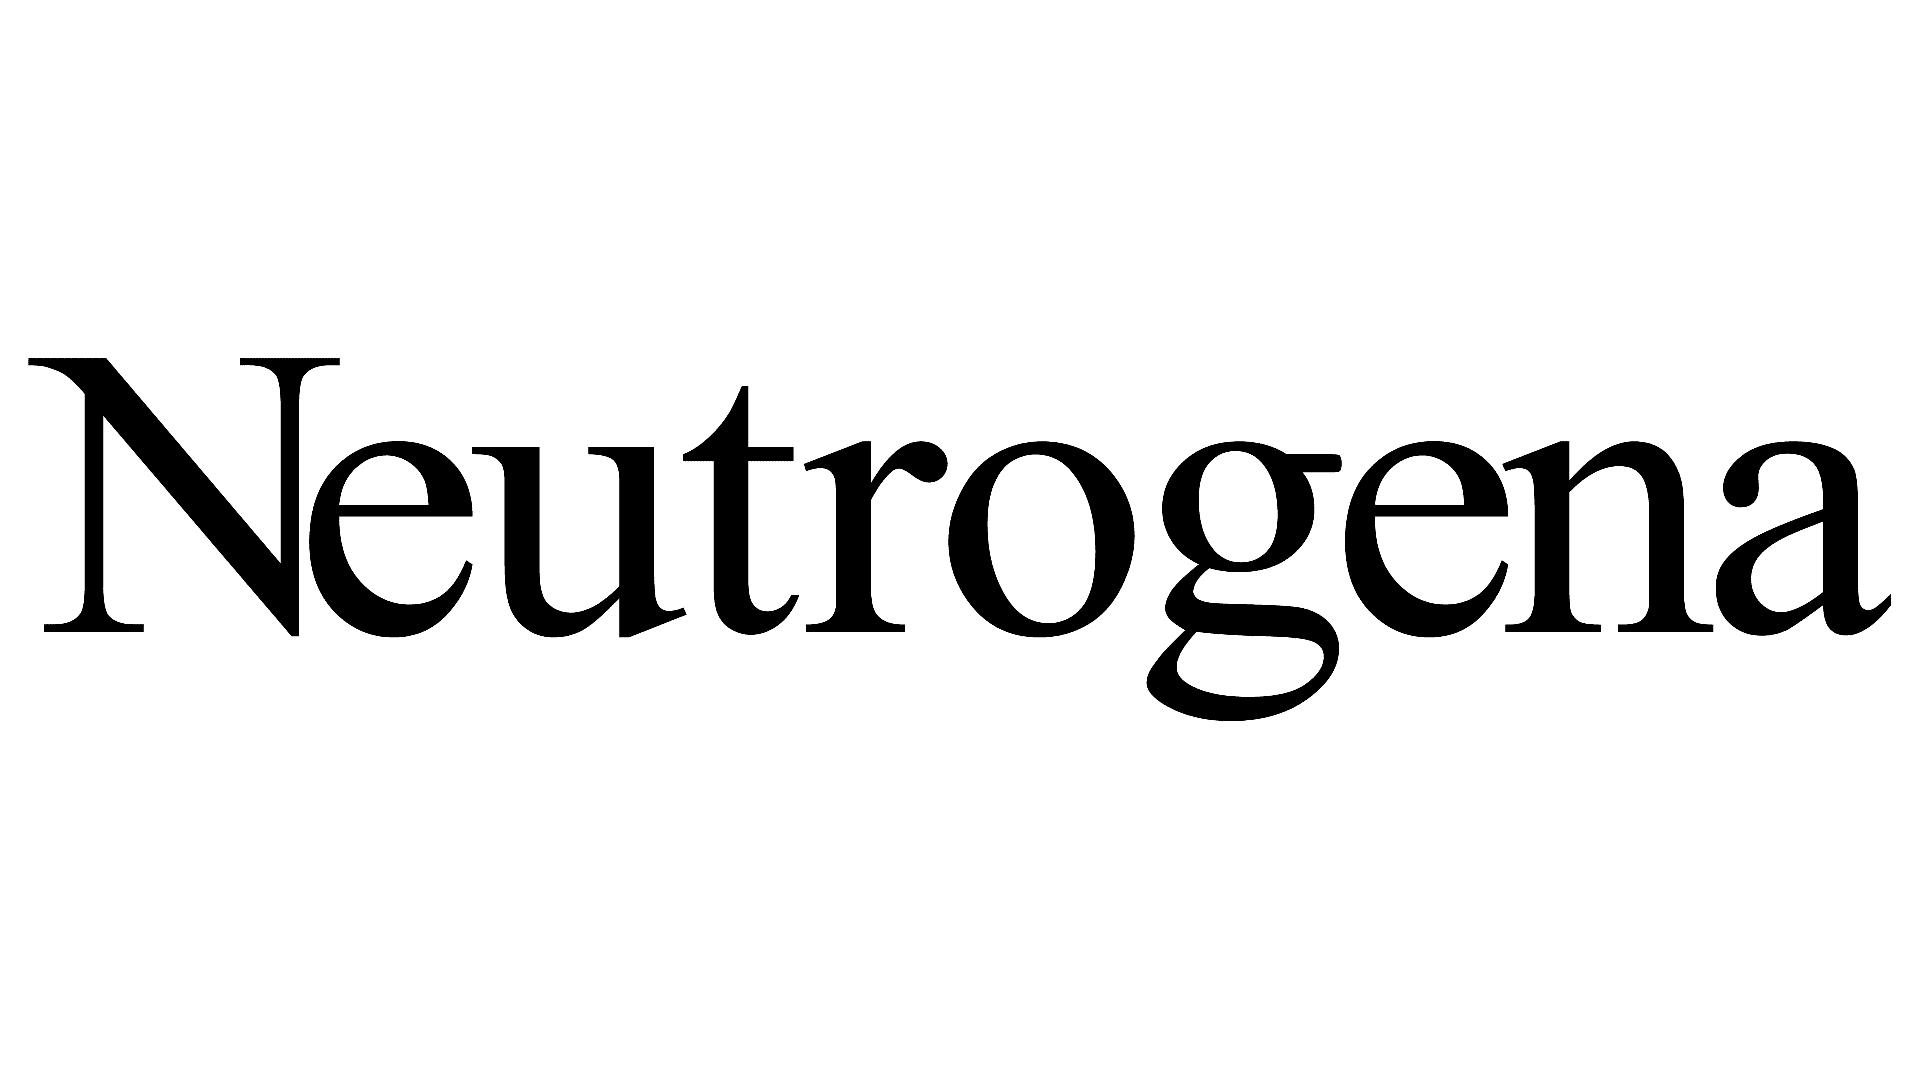 Brand: Neutrogena